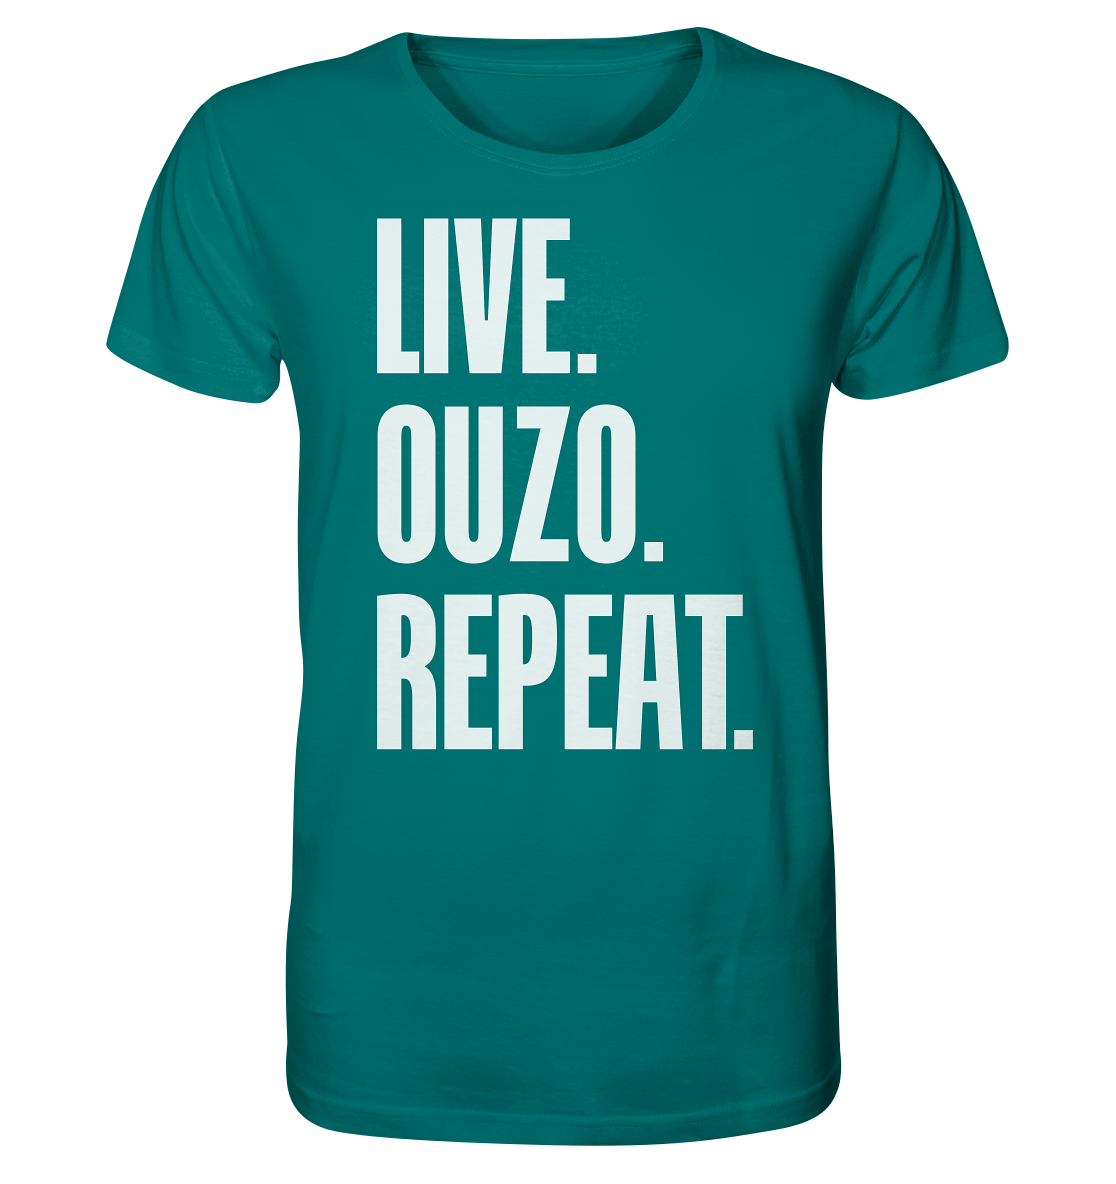 LIVE. OUZO. REPEAT. - Organic Shirt